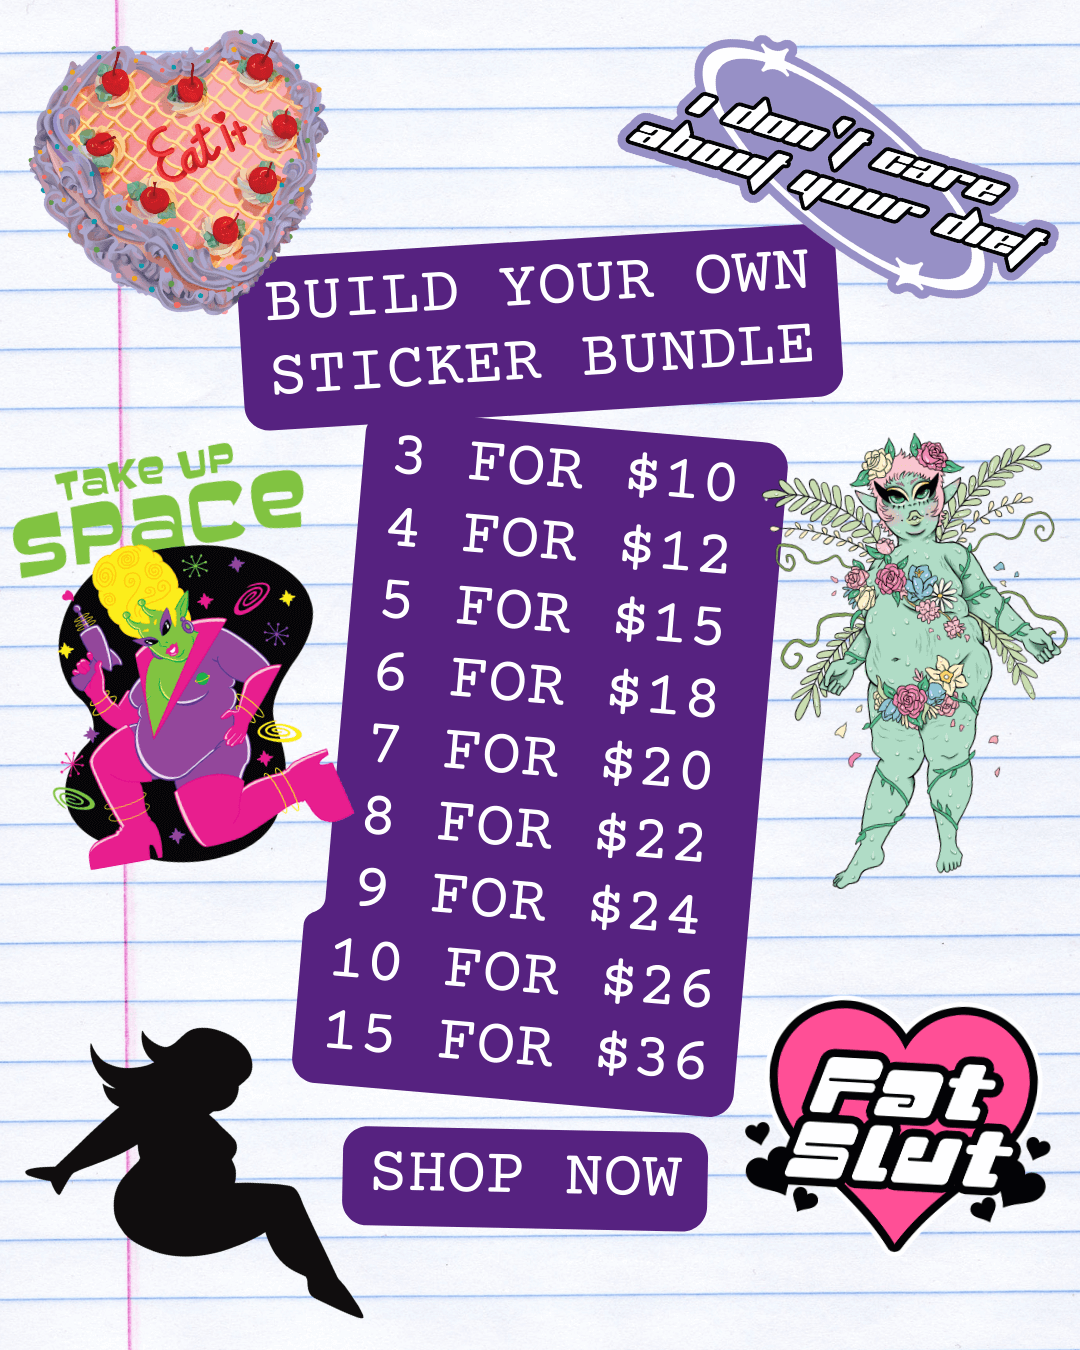 Build your own sticker bundle. Click through to shop now.